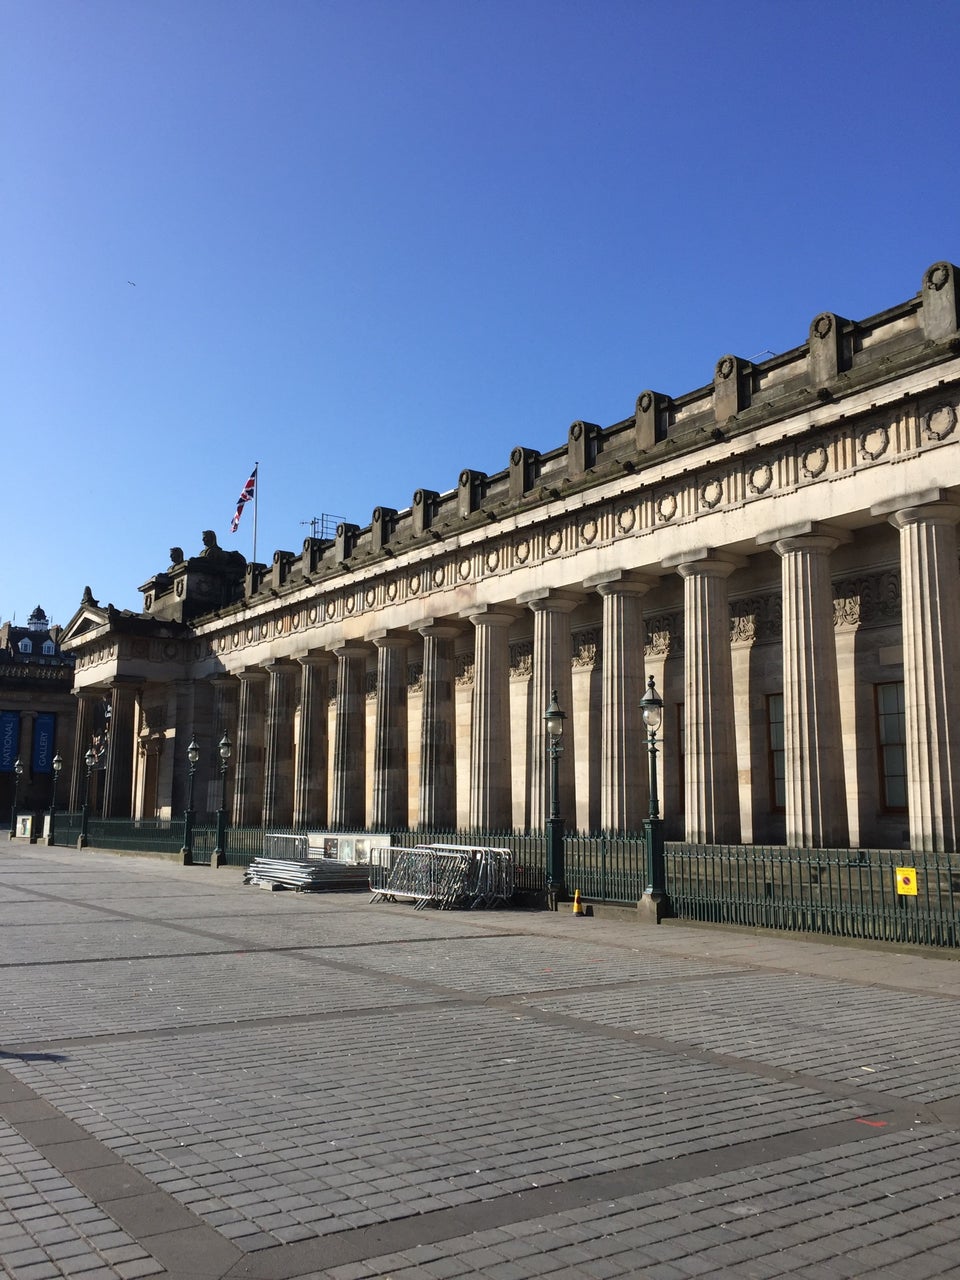 Photo of Scottish National Gallery